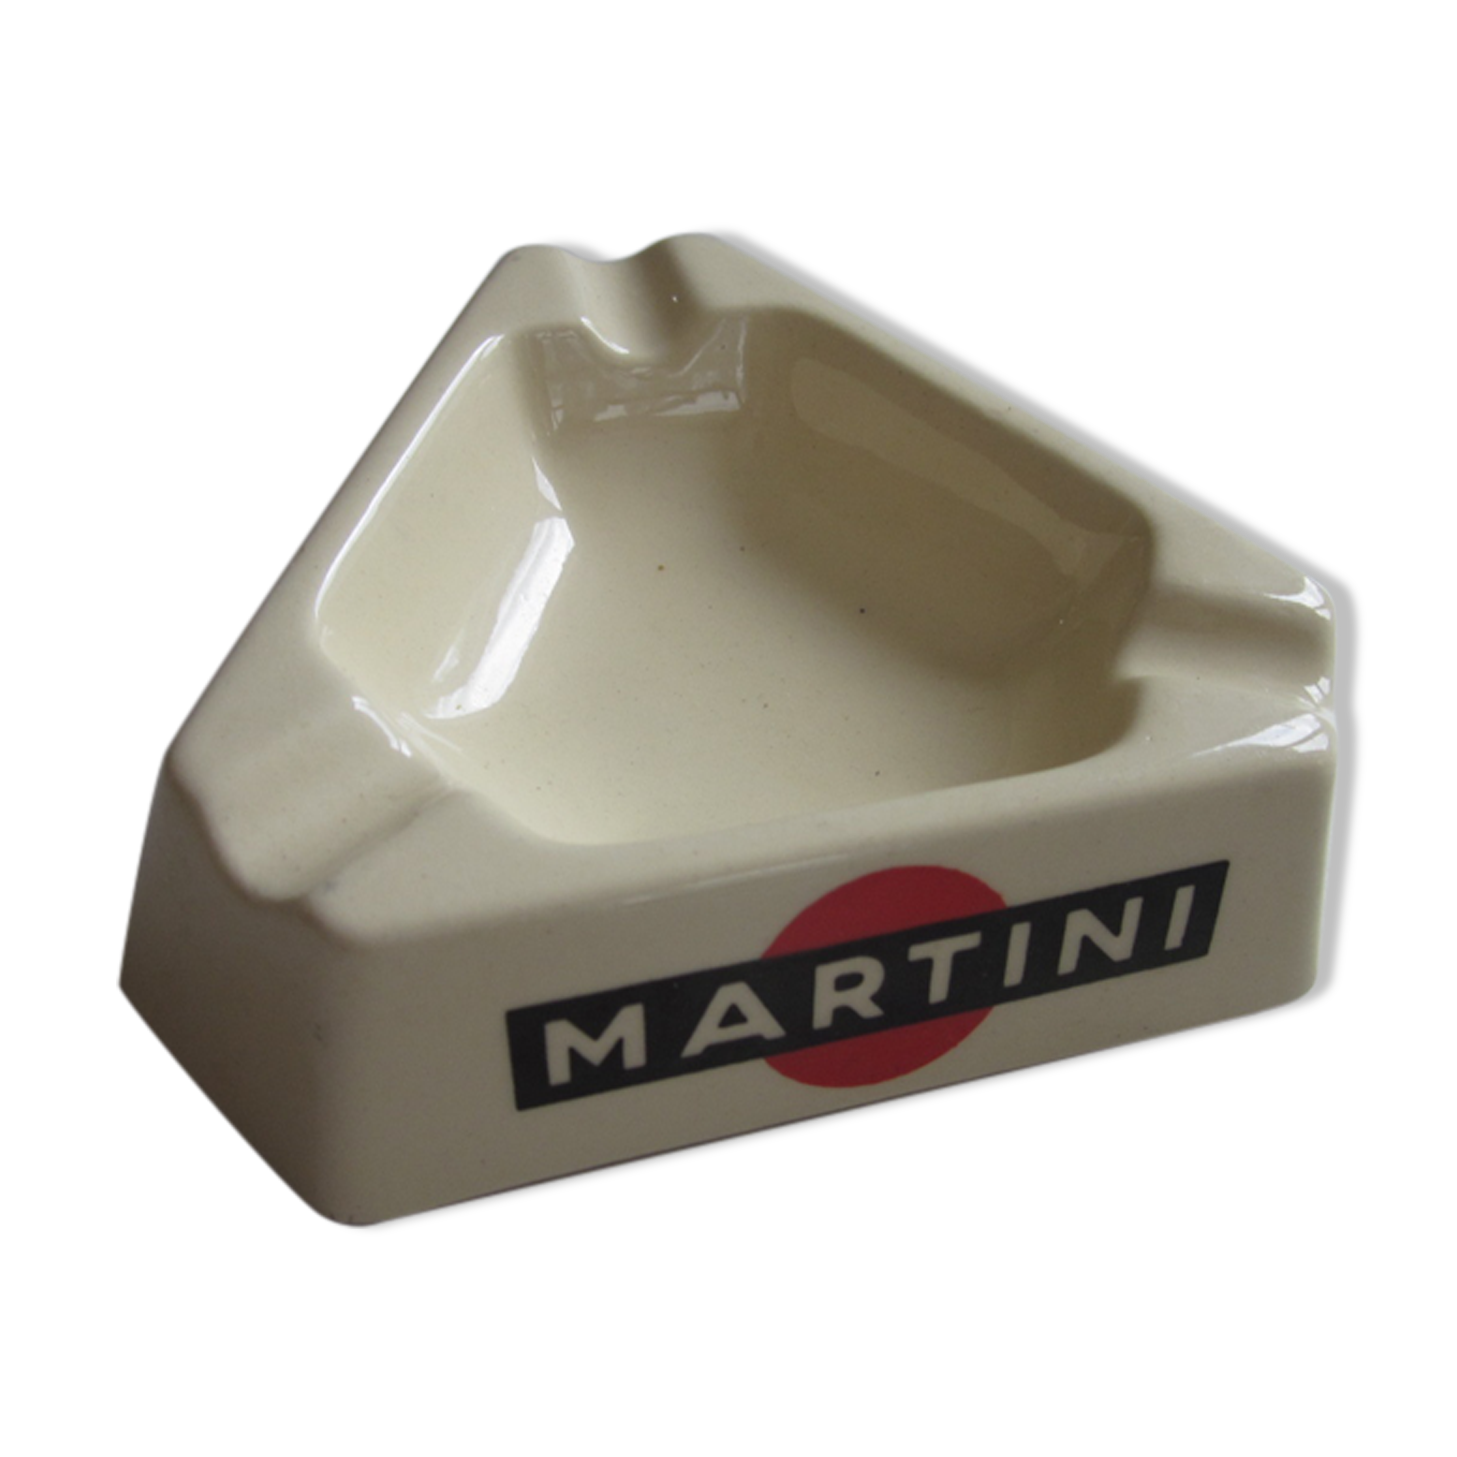 Vintage ceramic ashtray from the Martini brand wide vintage Martini ashtrey